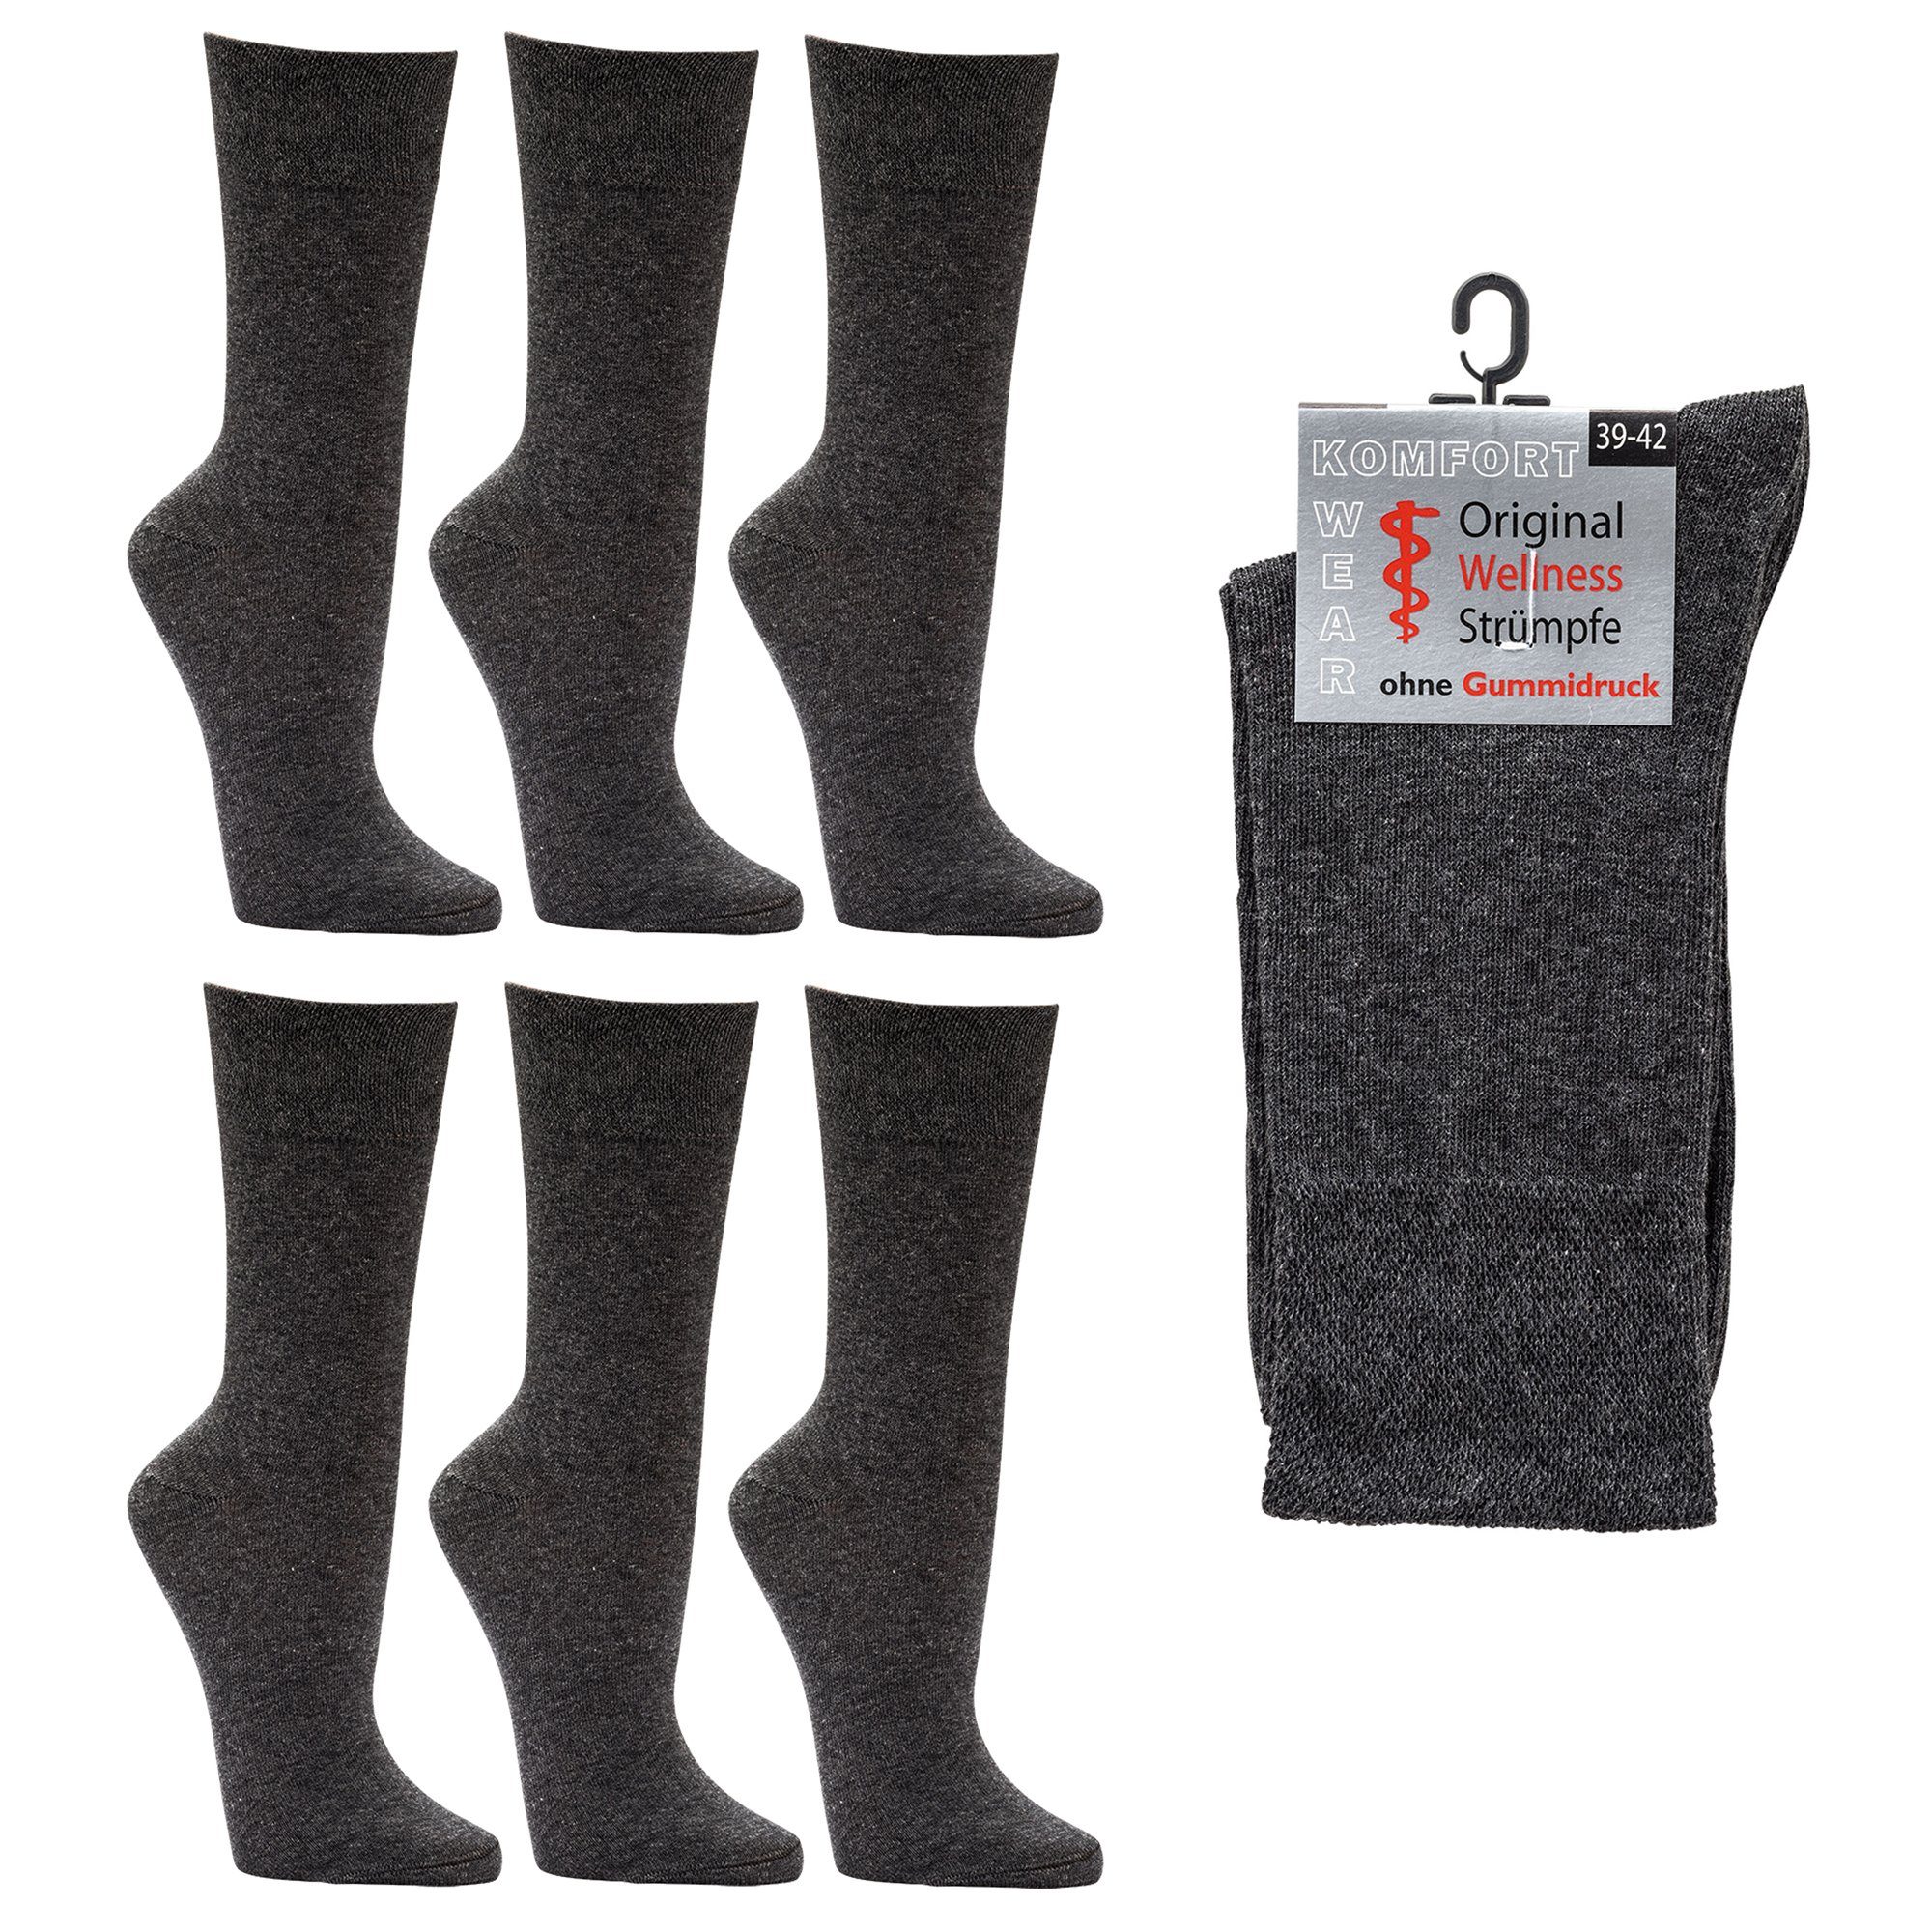 Socks 4 Fun Langsocken 2162 (Packung, 6-Paar, 6 Paar) Wellness-Socken ohne Gummidruck Herren Damen Socken Komfortbund anthrazit